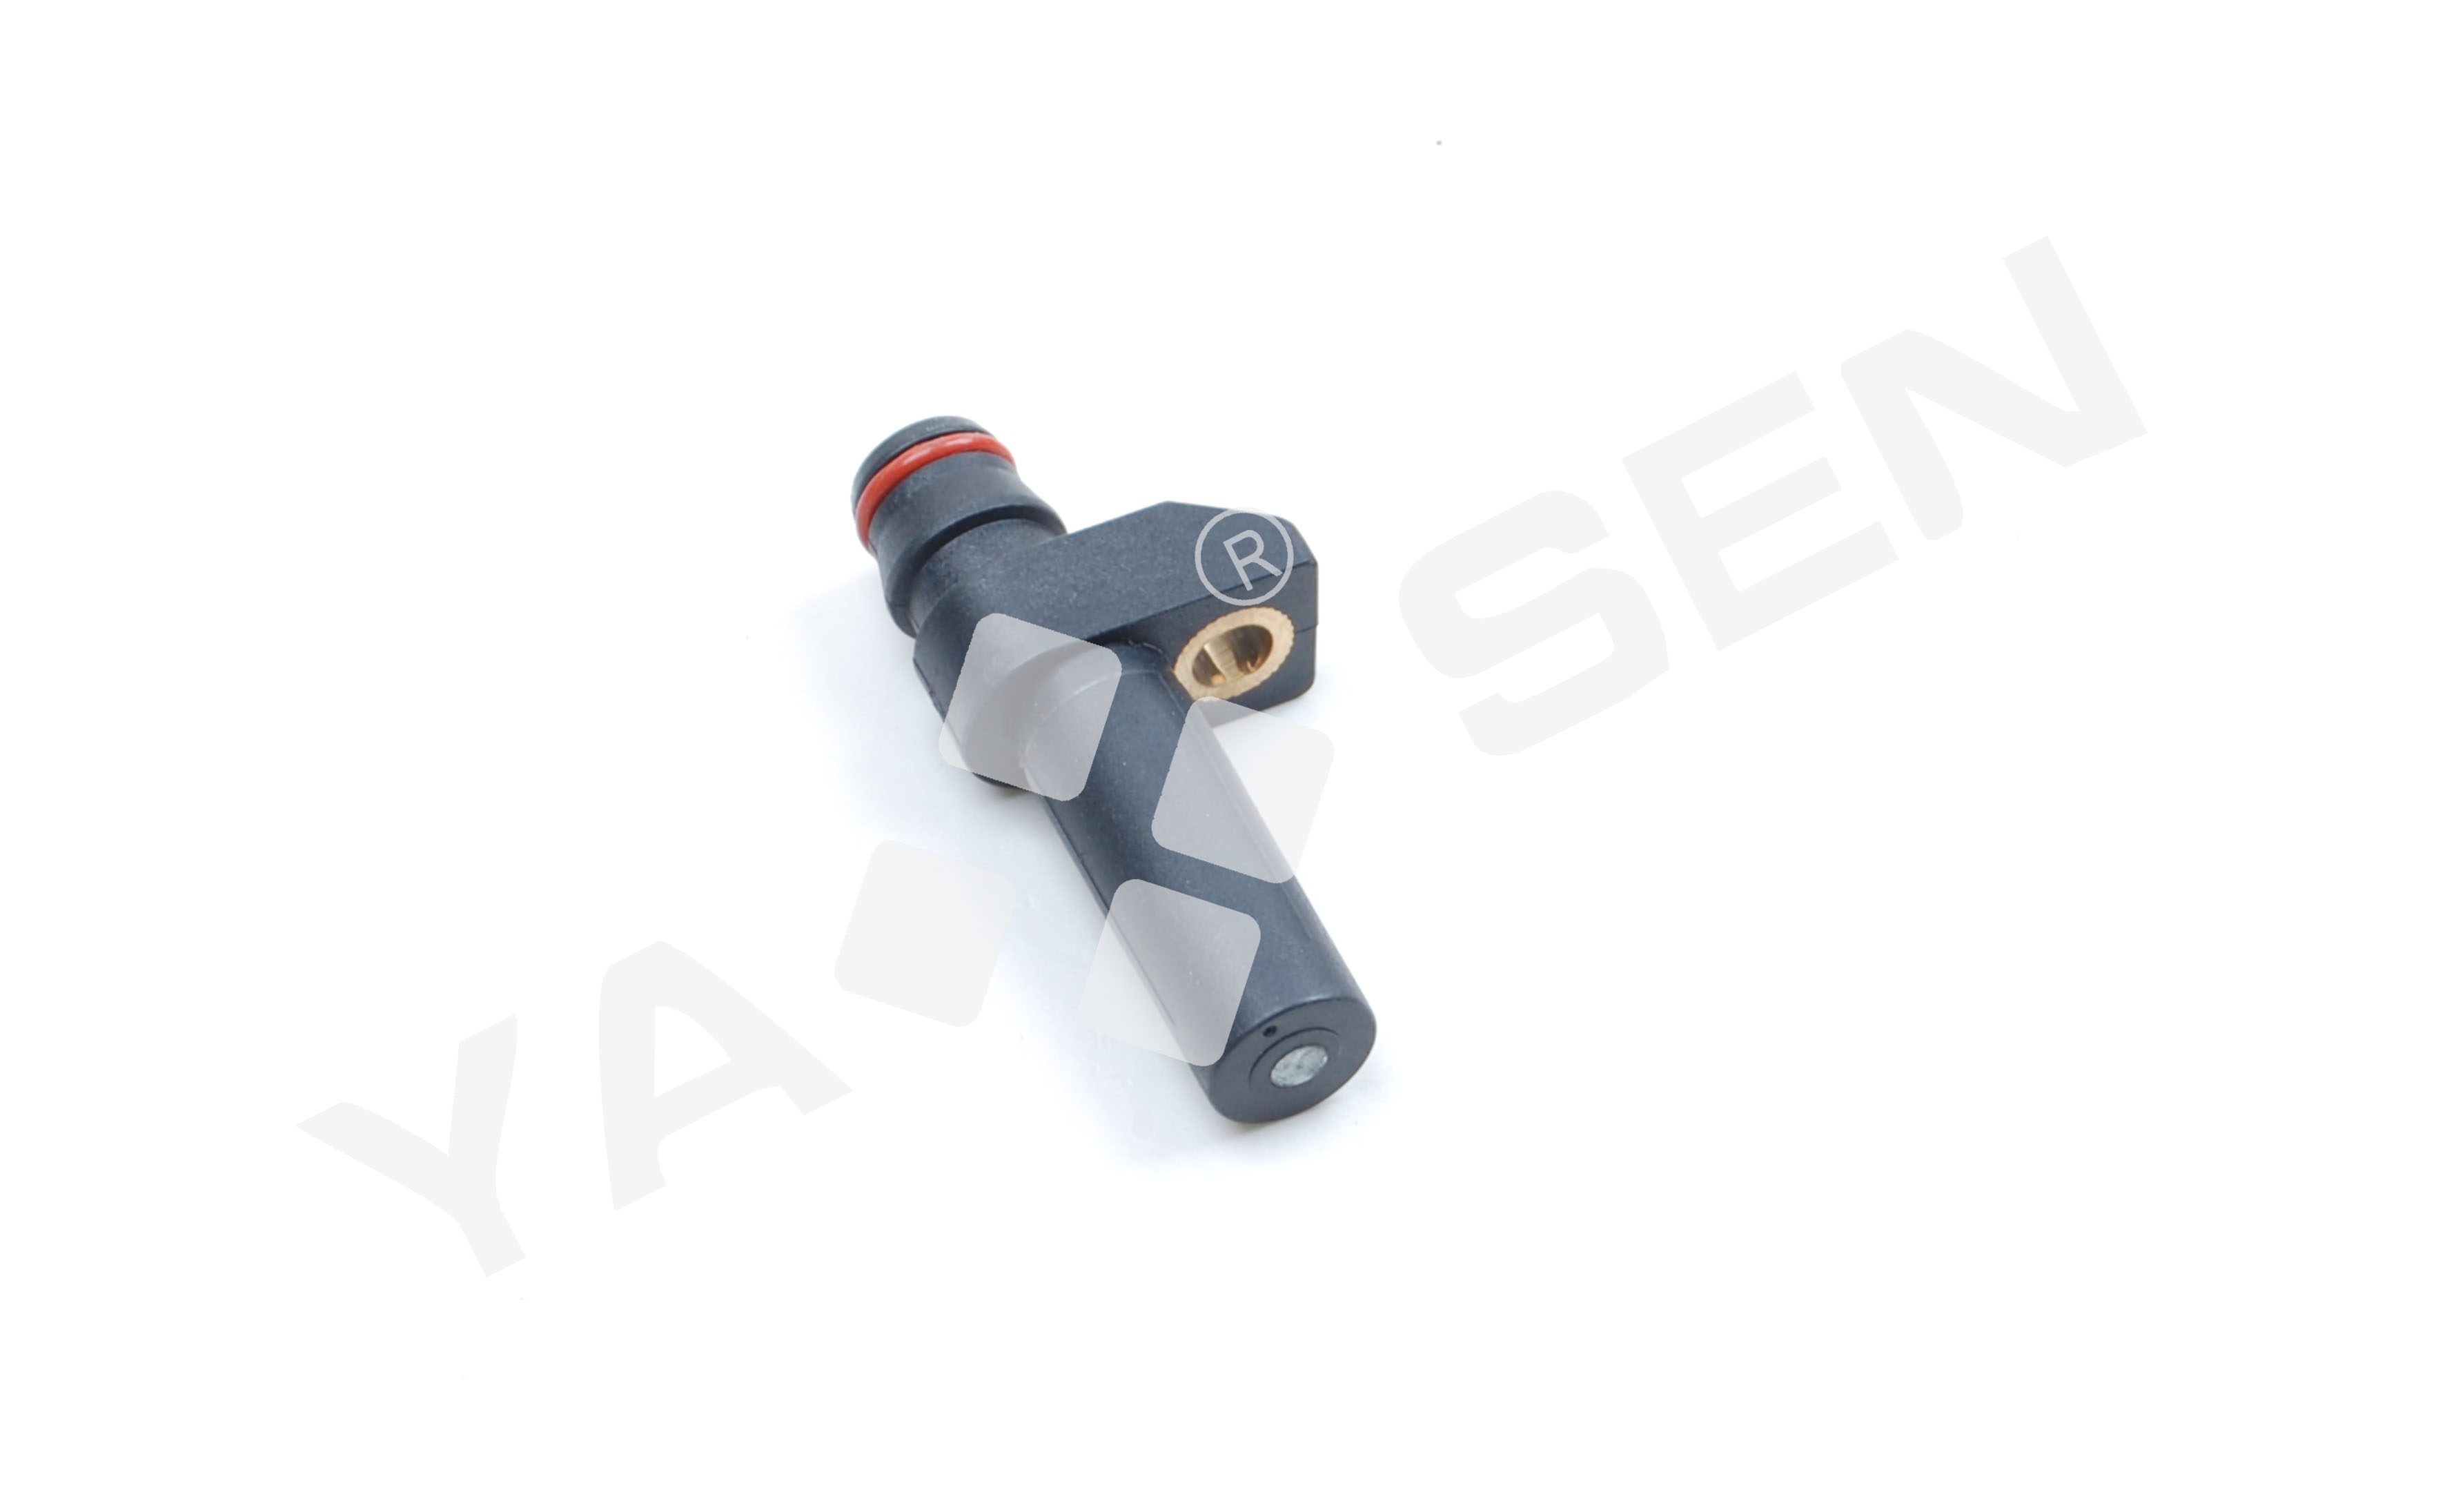 Cheap PriceList for Chevrolet Map Sensor - Crankshaft Position Sensor for Mercedes Benz, 0031537228 0031537428 CRK40 0281002124  PC474  5S1836  SU4738  CSS974 A – YASEN